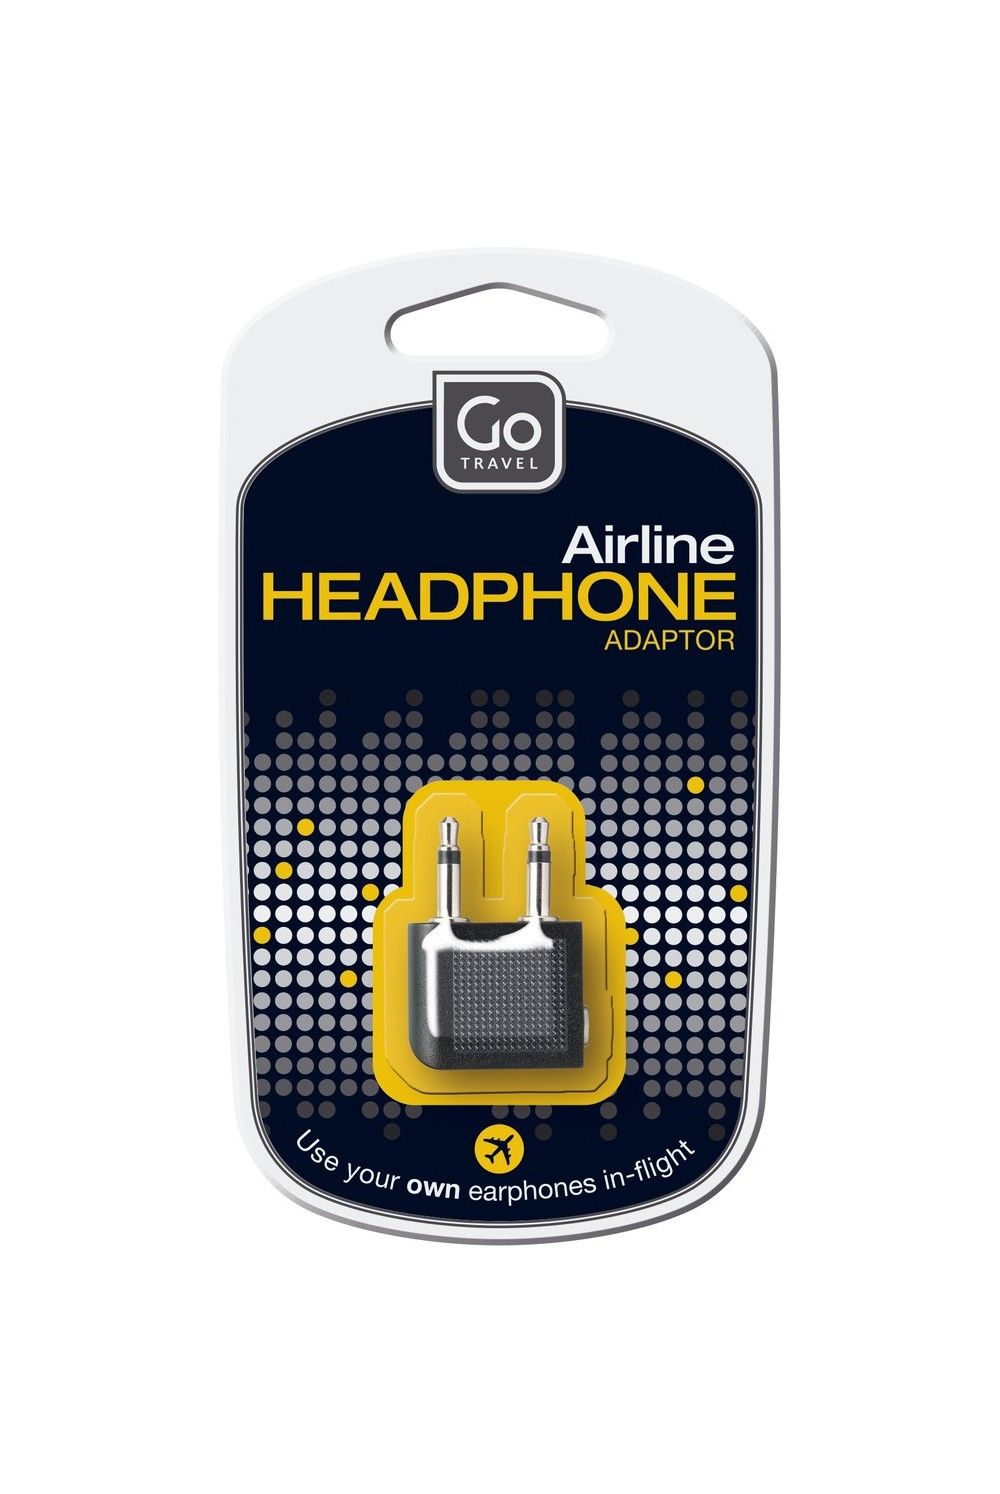 Go Travel Airline Headphone Adaptor